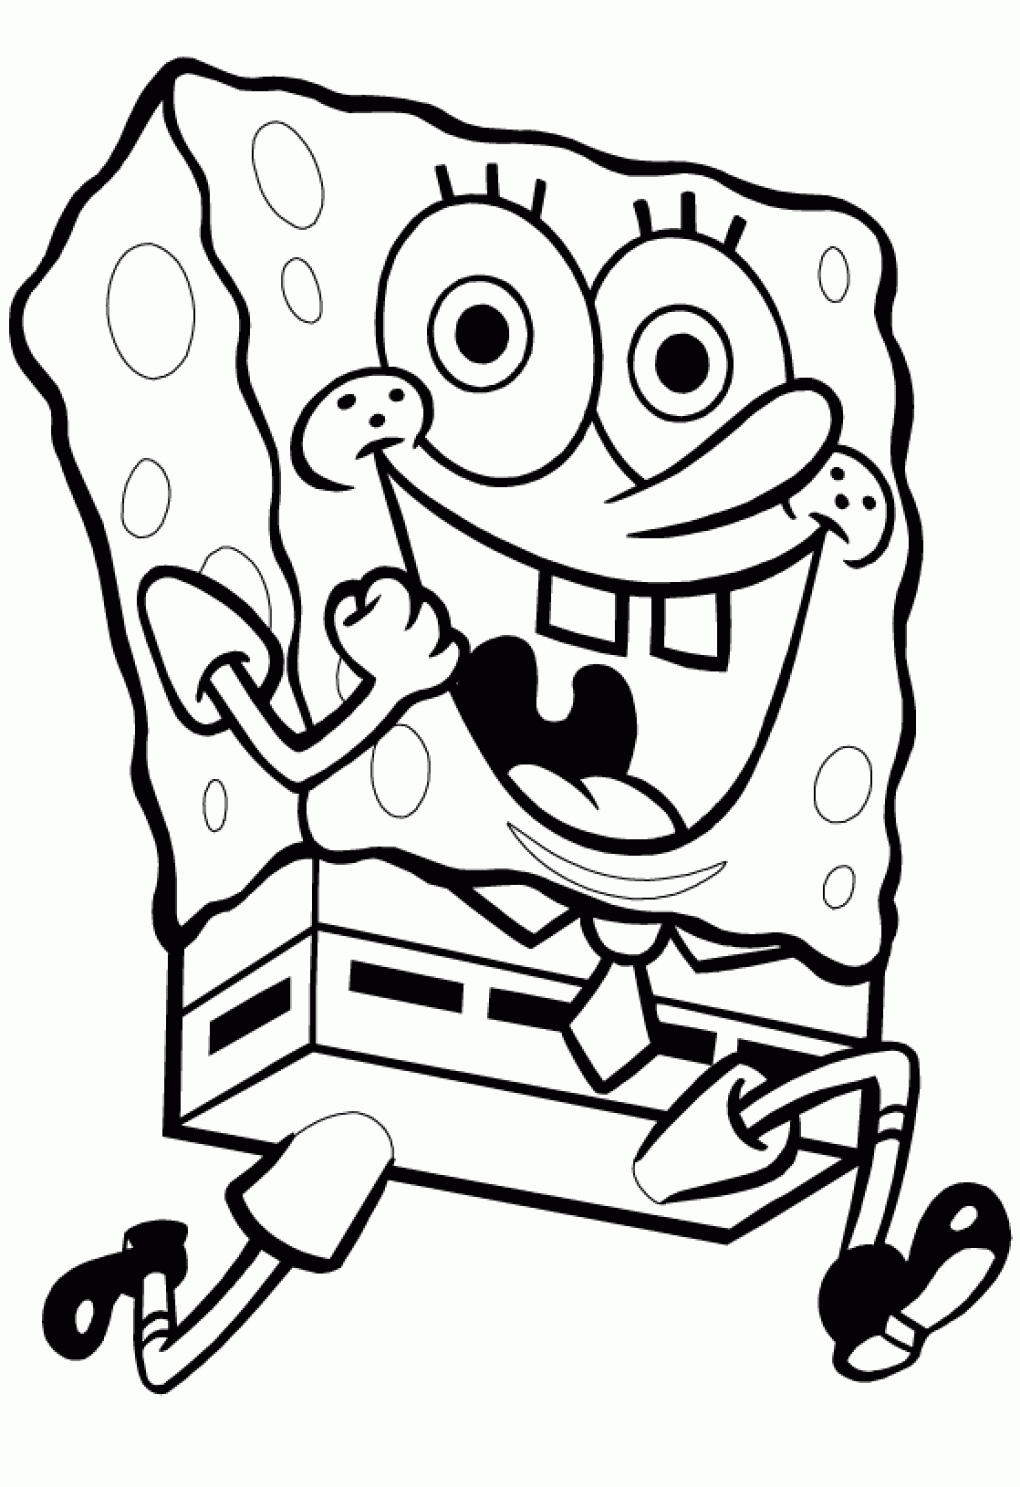 SpongeBob SquarePants Coloring Pages Cartoons Images of Spongebob Squarepants Printable 2020 5960 Coloring4free